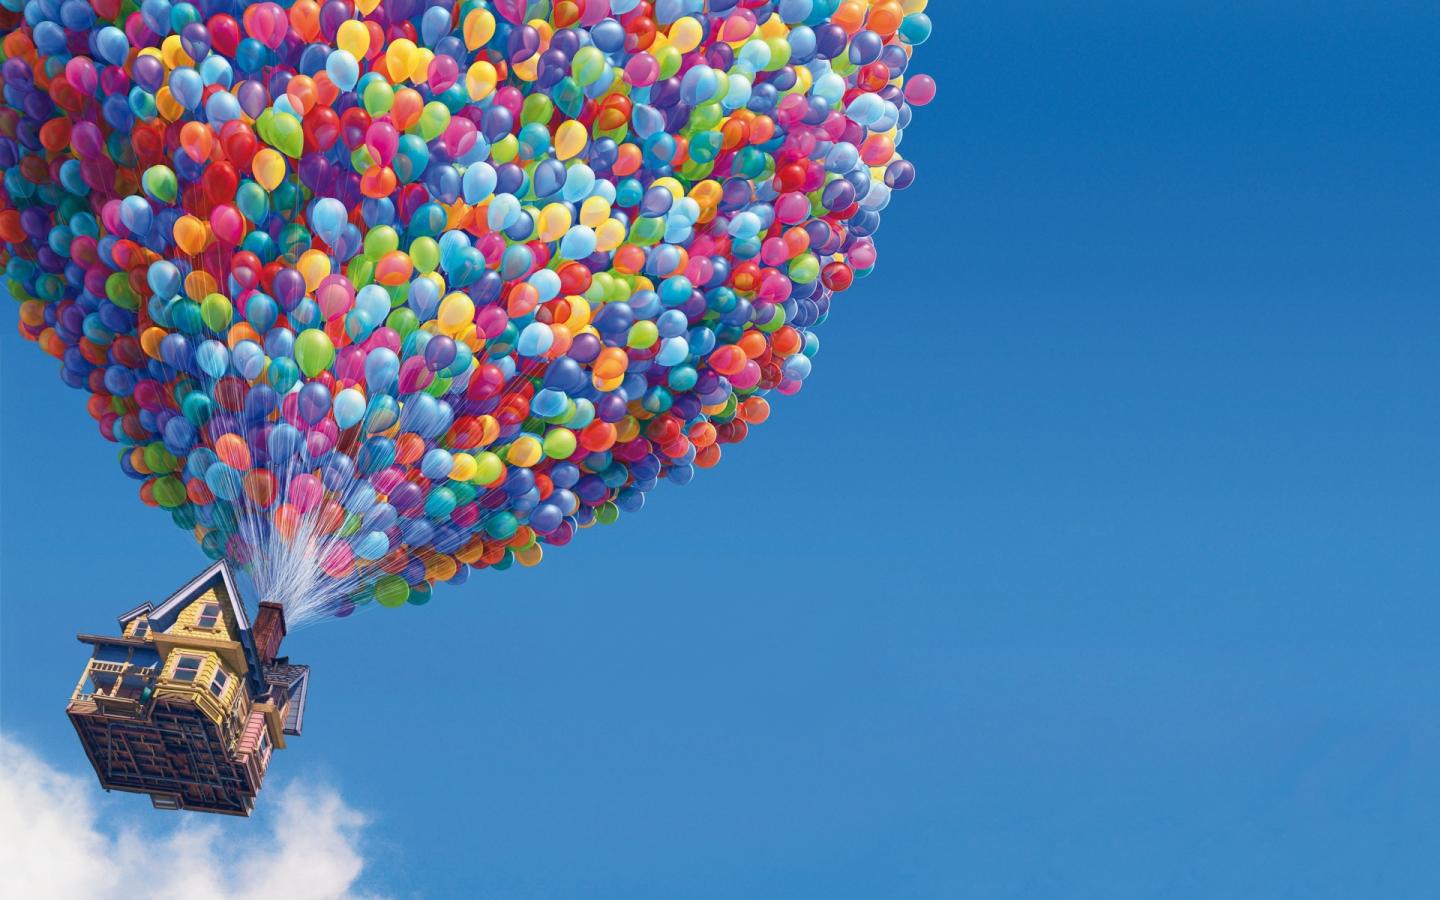 animation wallpaper hd,hot air ballooning,hot air balloon,sky,balloon,air sports